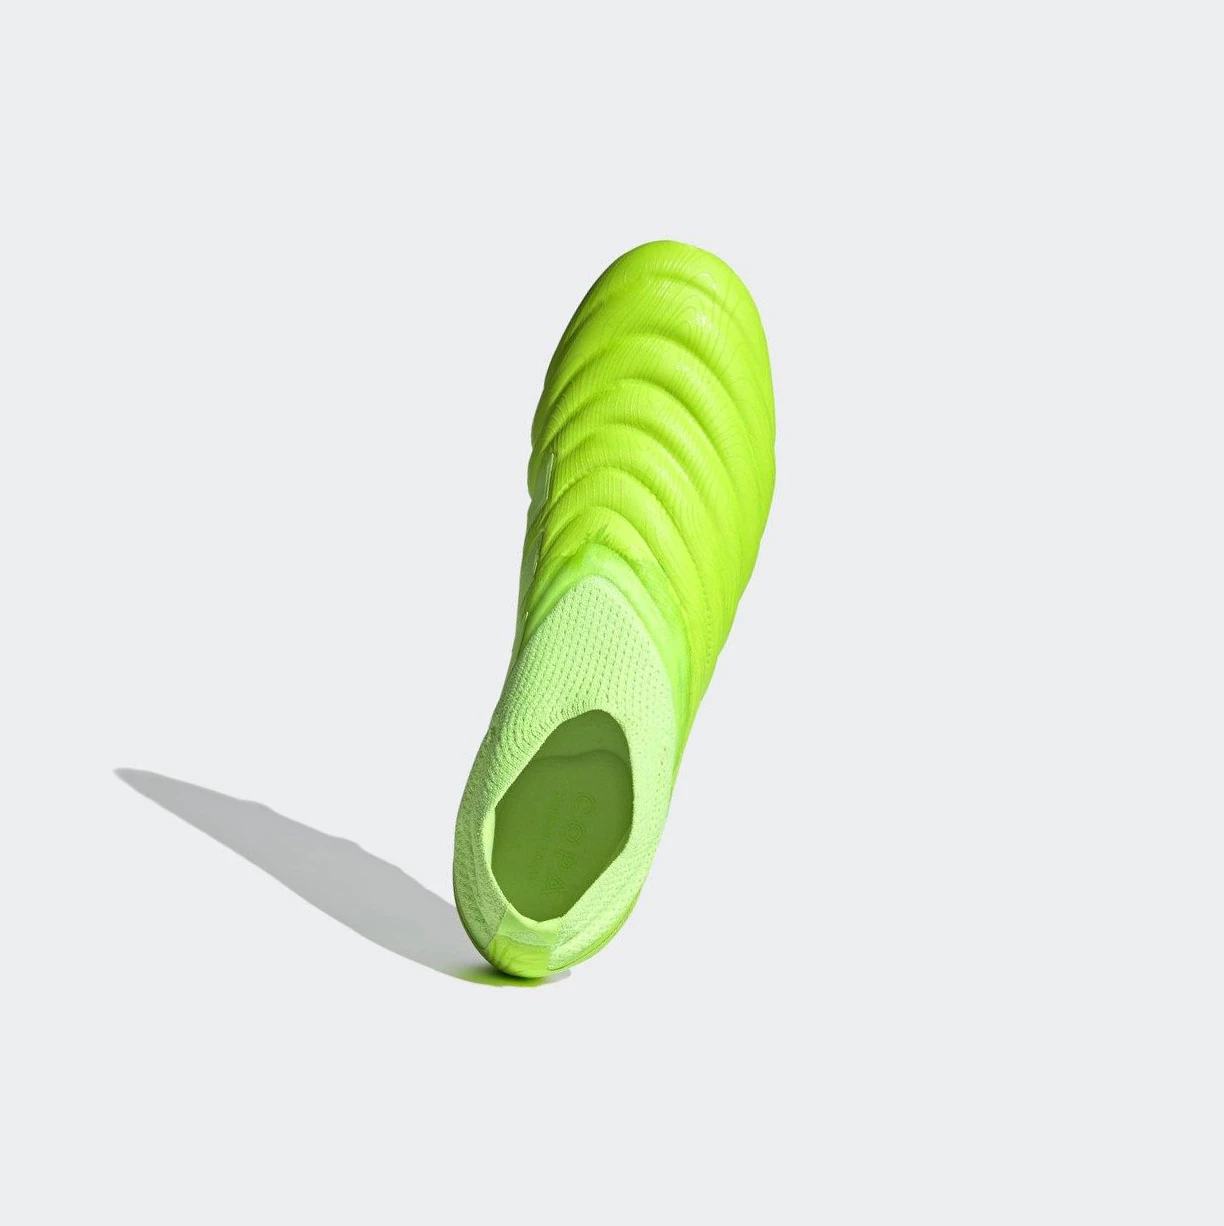 Kopačky Adidas Copa 20+ Firm Ground Panske Zelene | 960SKMLHDVQ